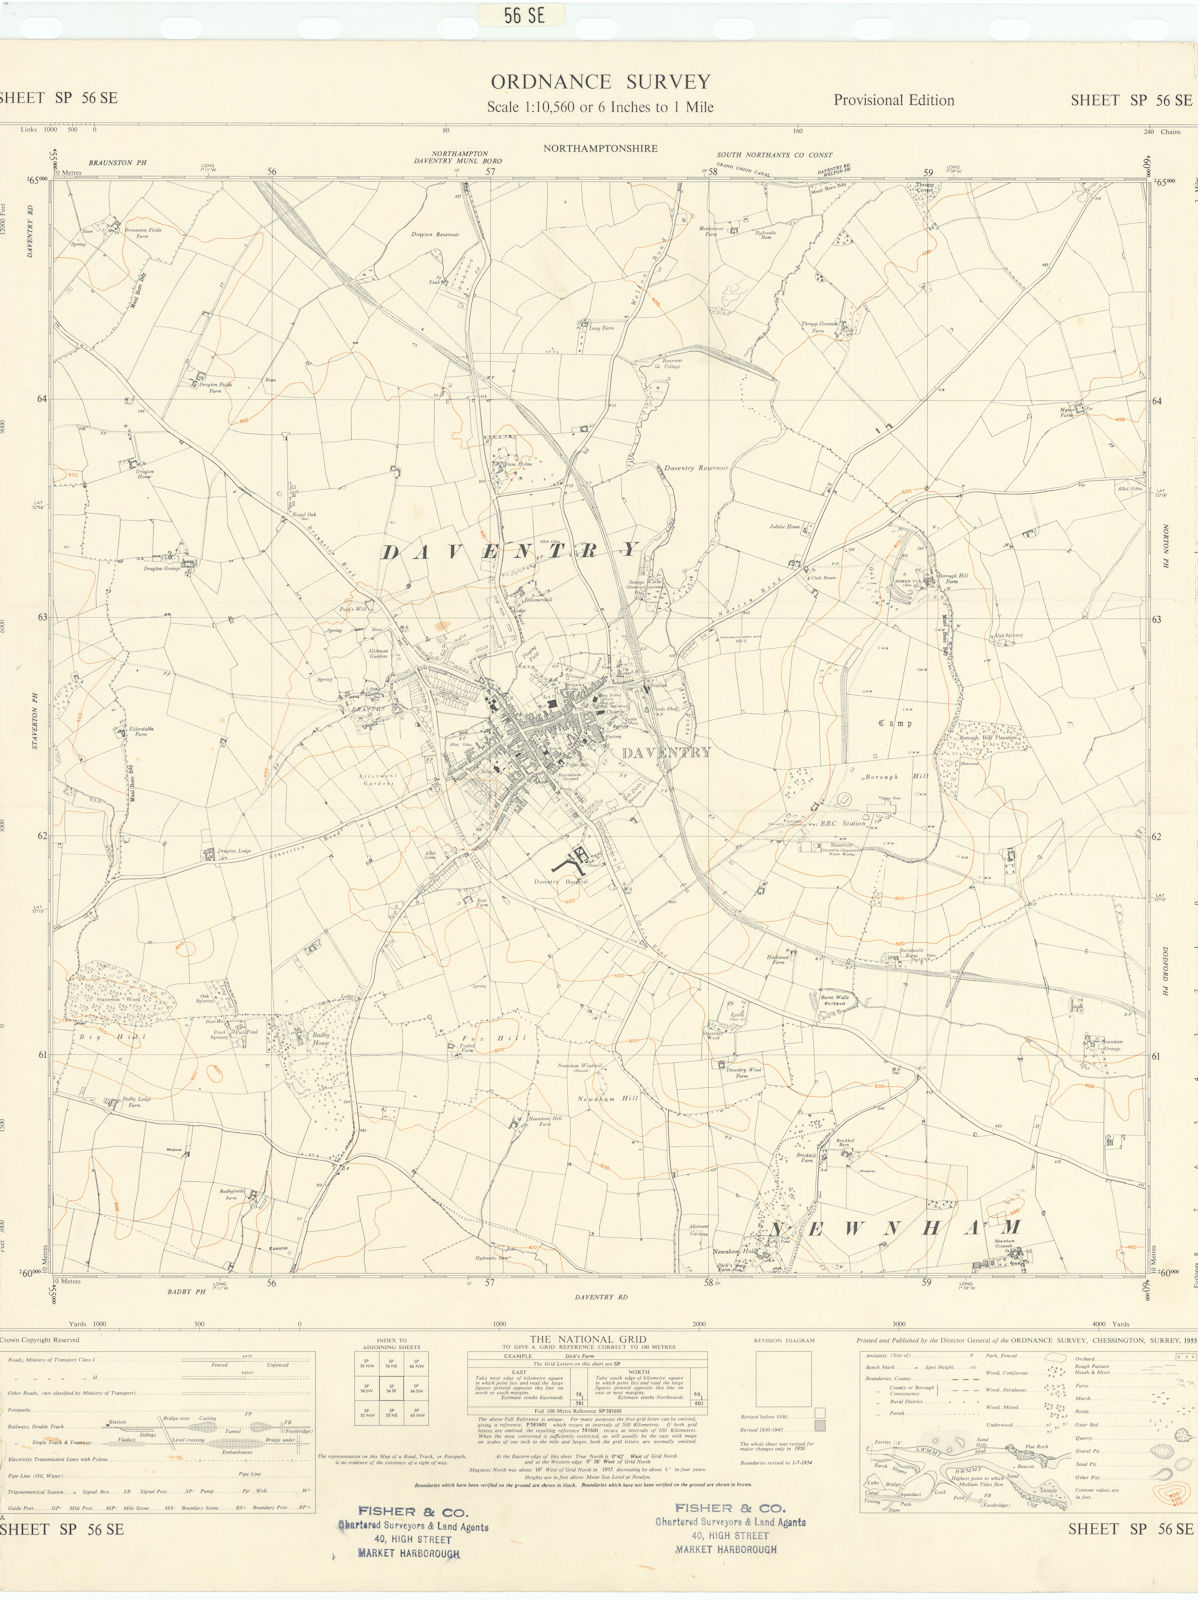 Ordnance Survey Sheet SP56SE Northamptonshire Daventry Newham 1955 old map